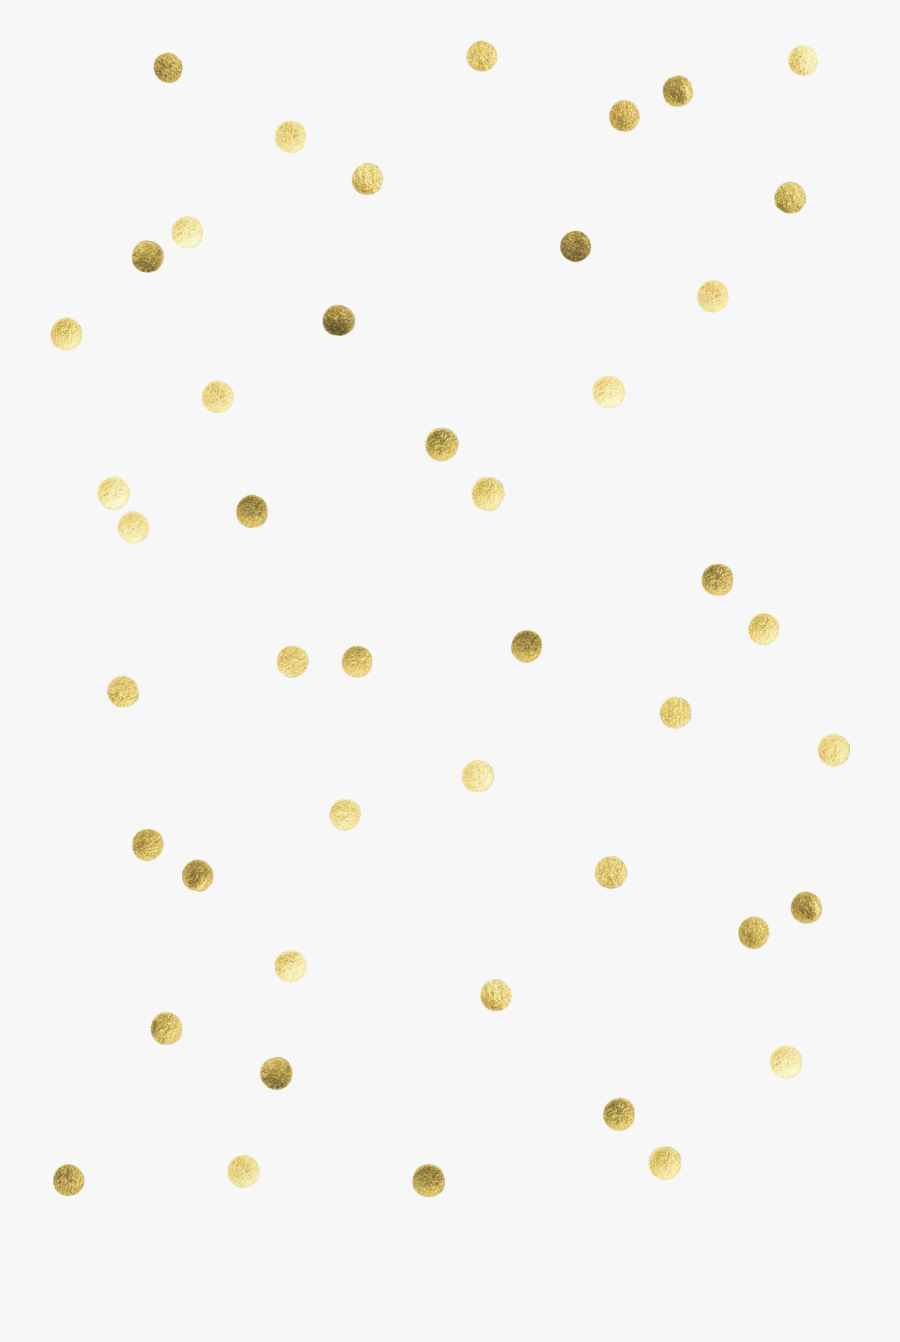 Clip Art Gold Confetti Png - Confetti Gold Glitter Png, Transparent Clipart